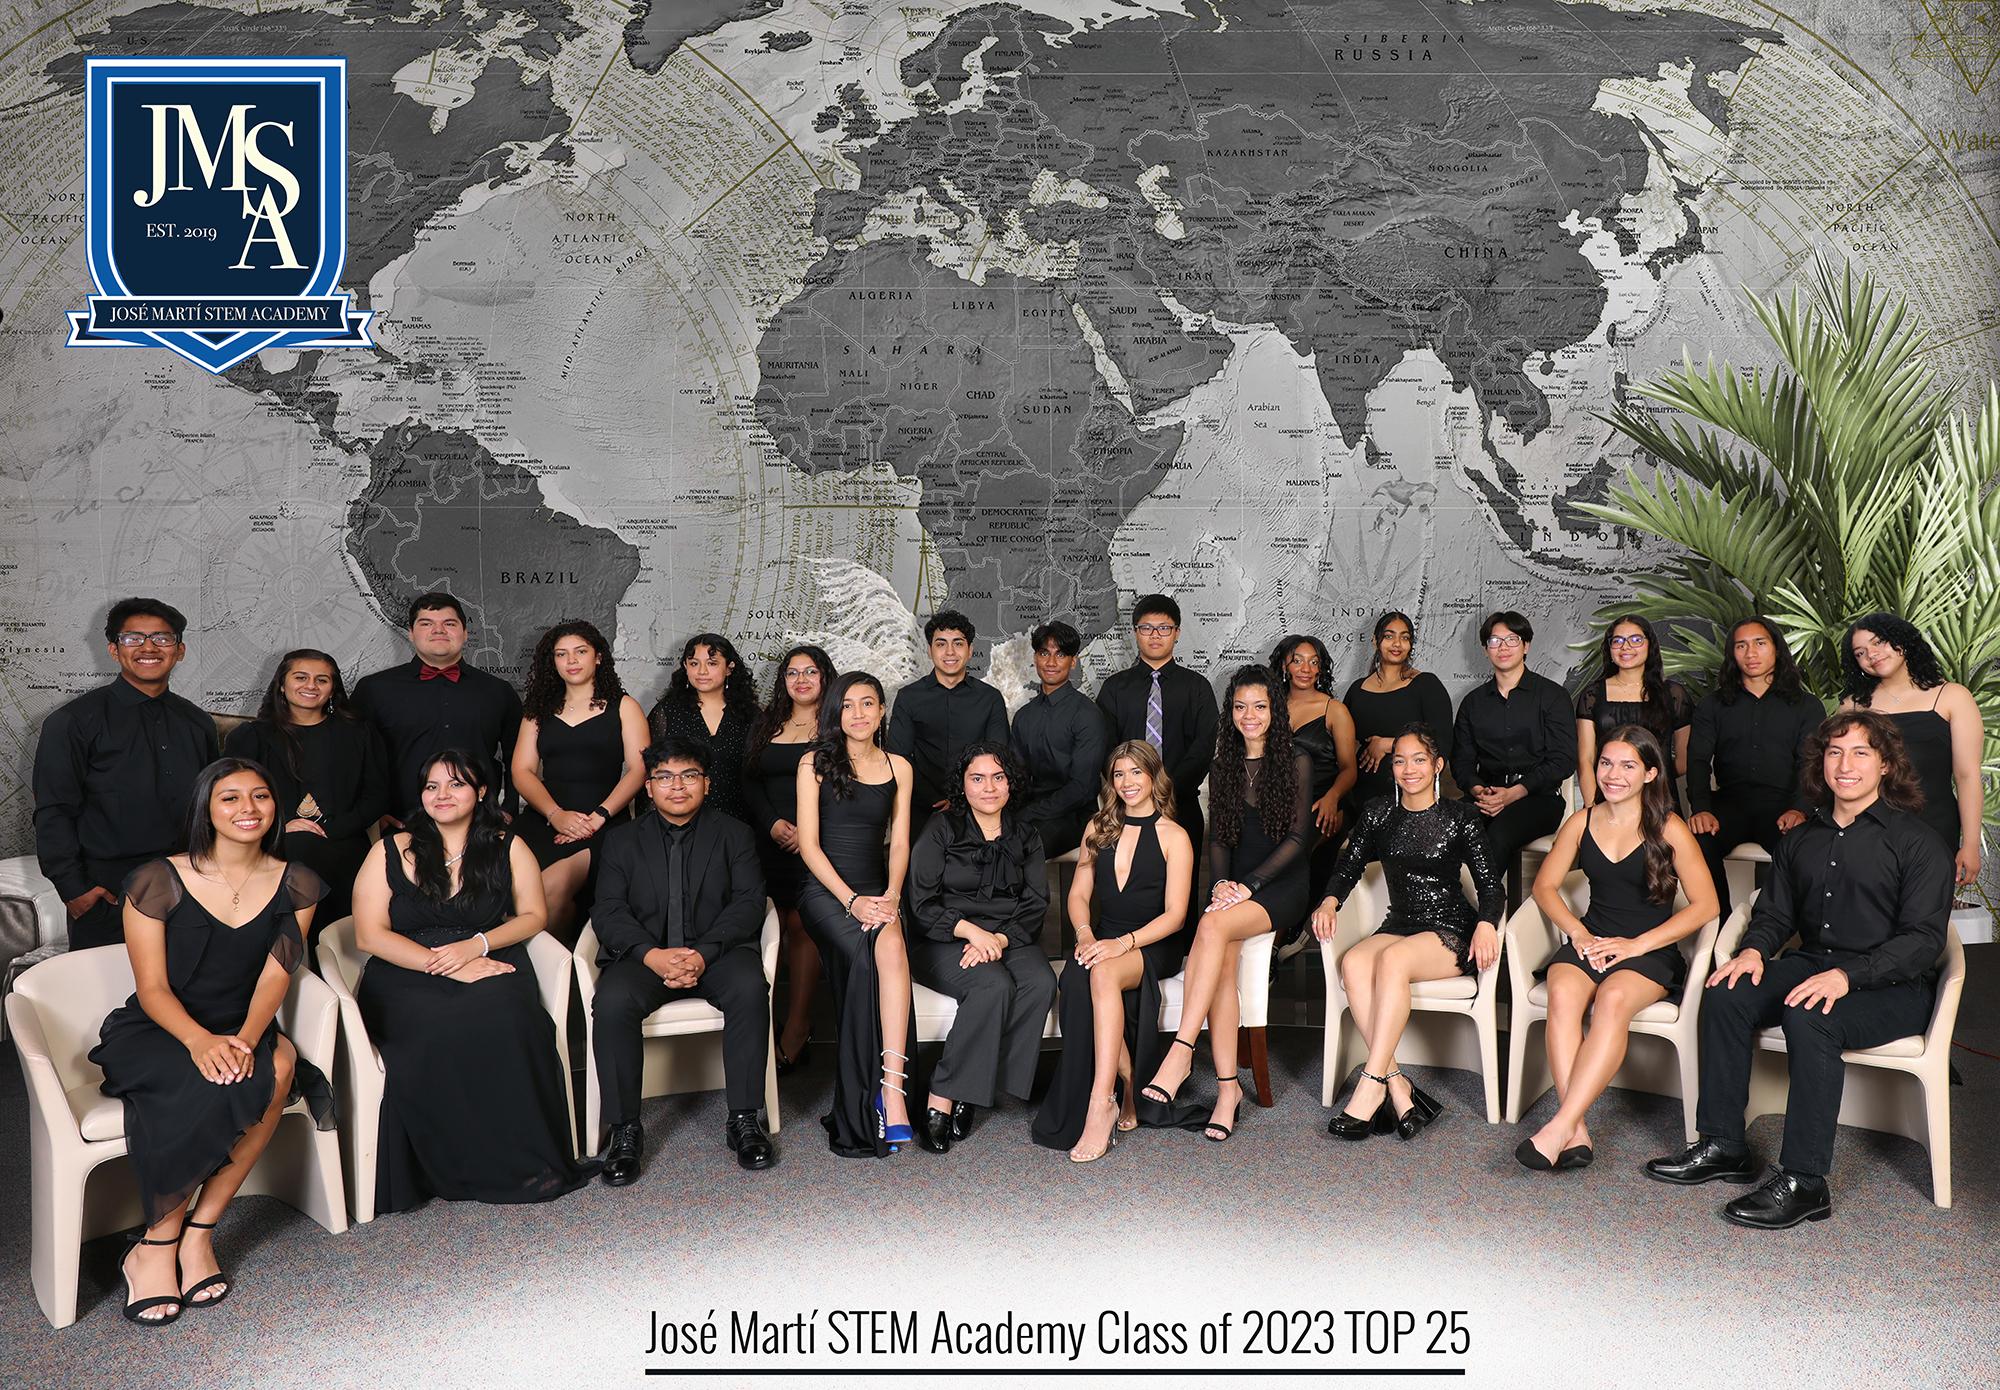 José Martí STEM Academy Class of 2023 Top 25